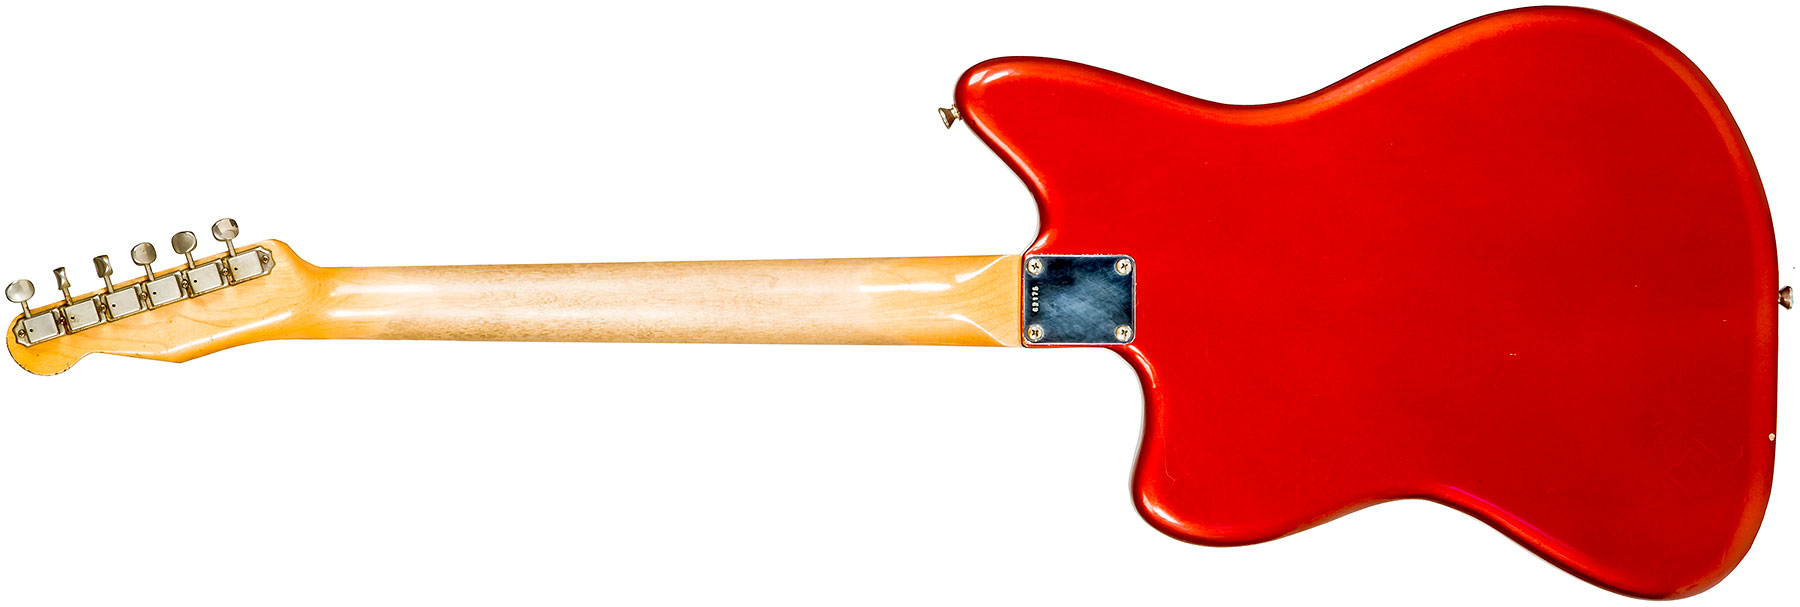 Rebelrelic Wrangler 2h Trem Rw #62175 - Light Aged Candy Apple Red - Guitarra eléctrica semi caja - Variation 1